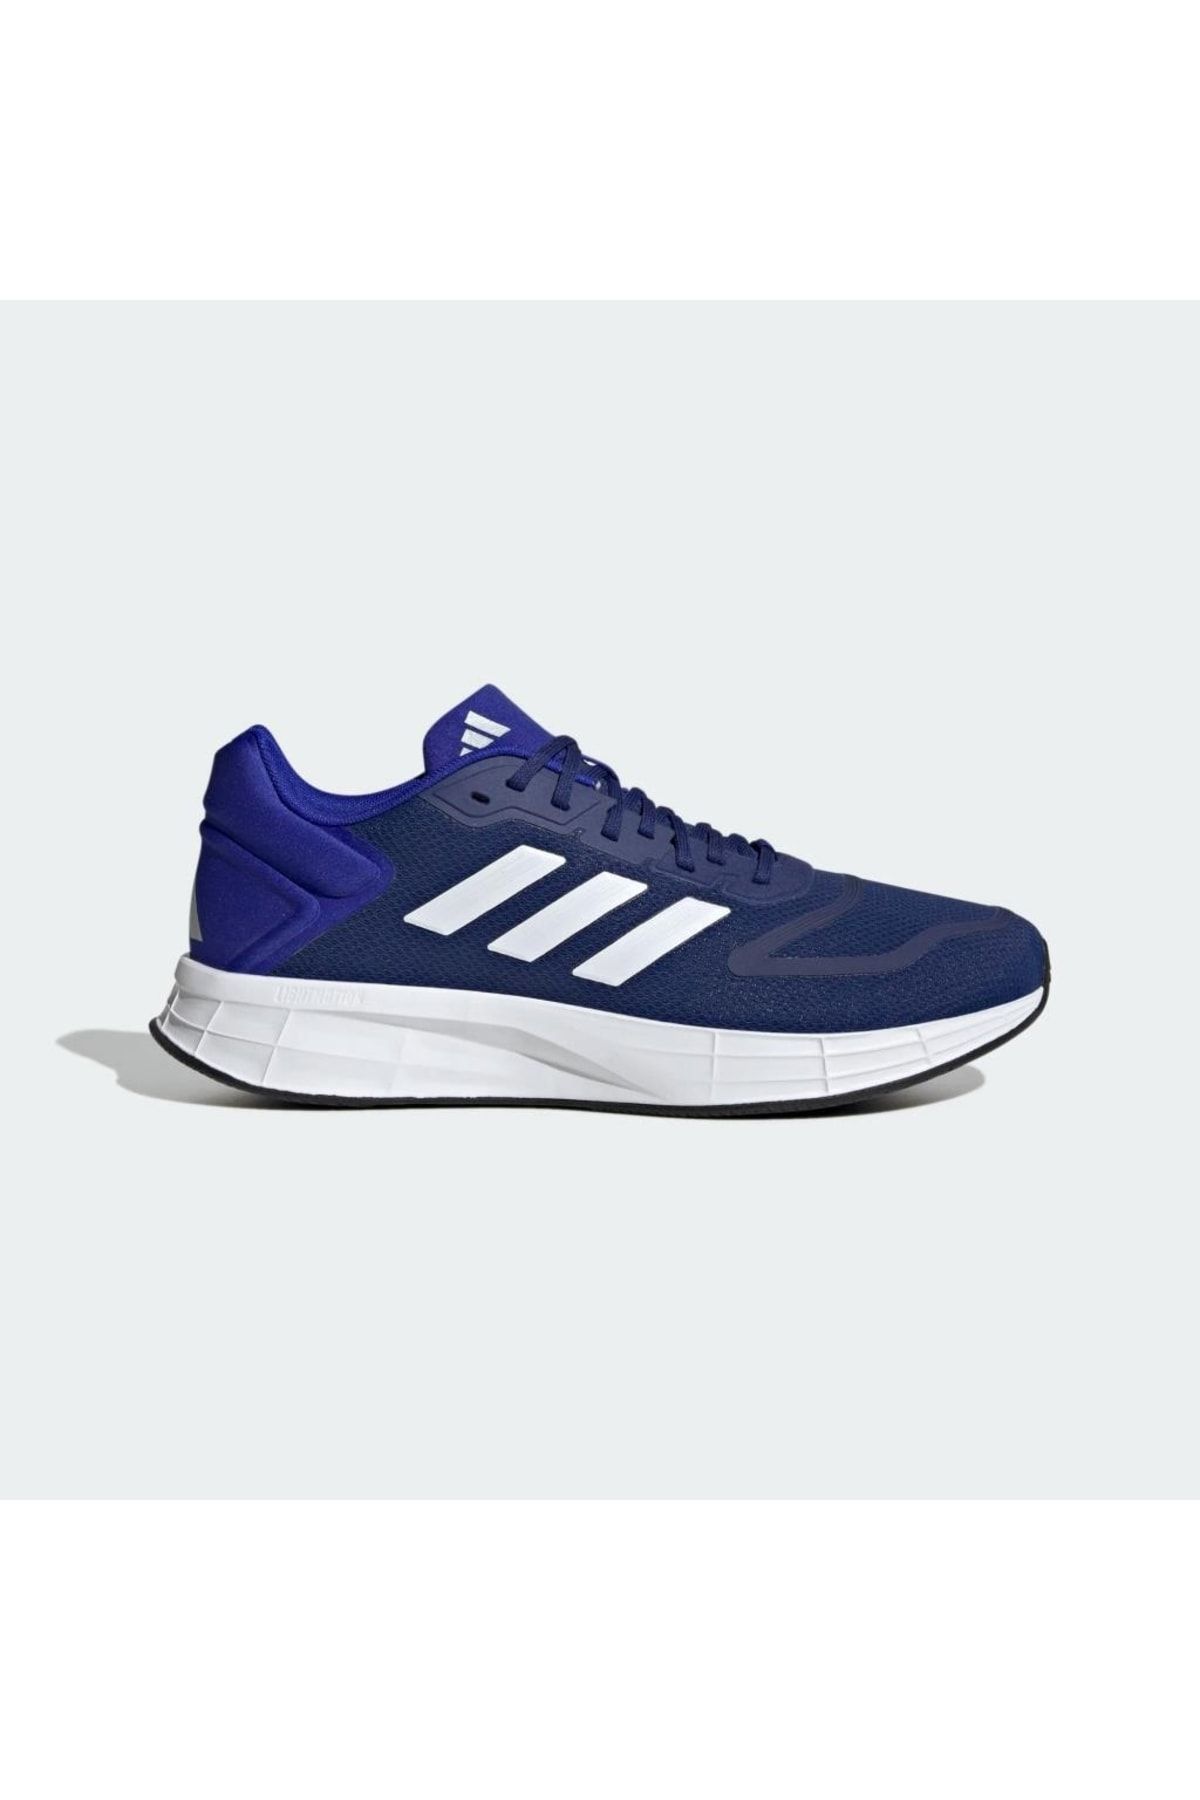 adidas Duramo Sl 2.0 Ayakkabı - Mavi Hp2383